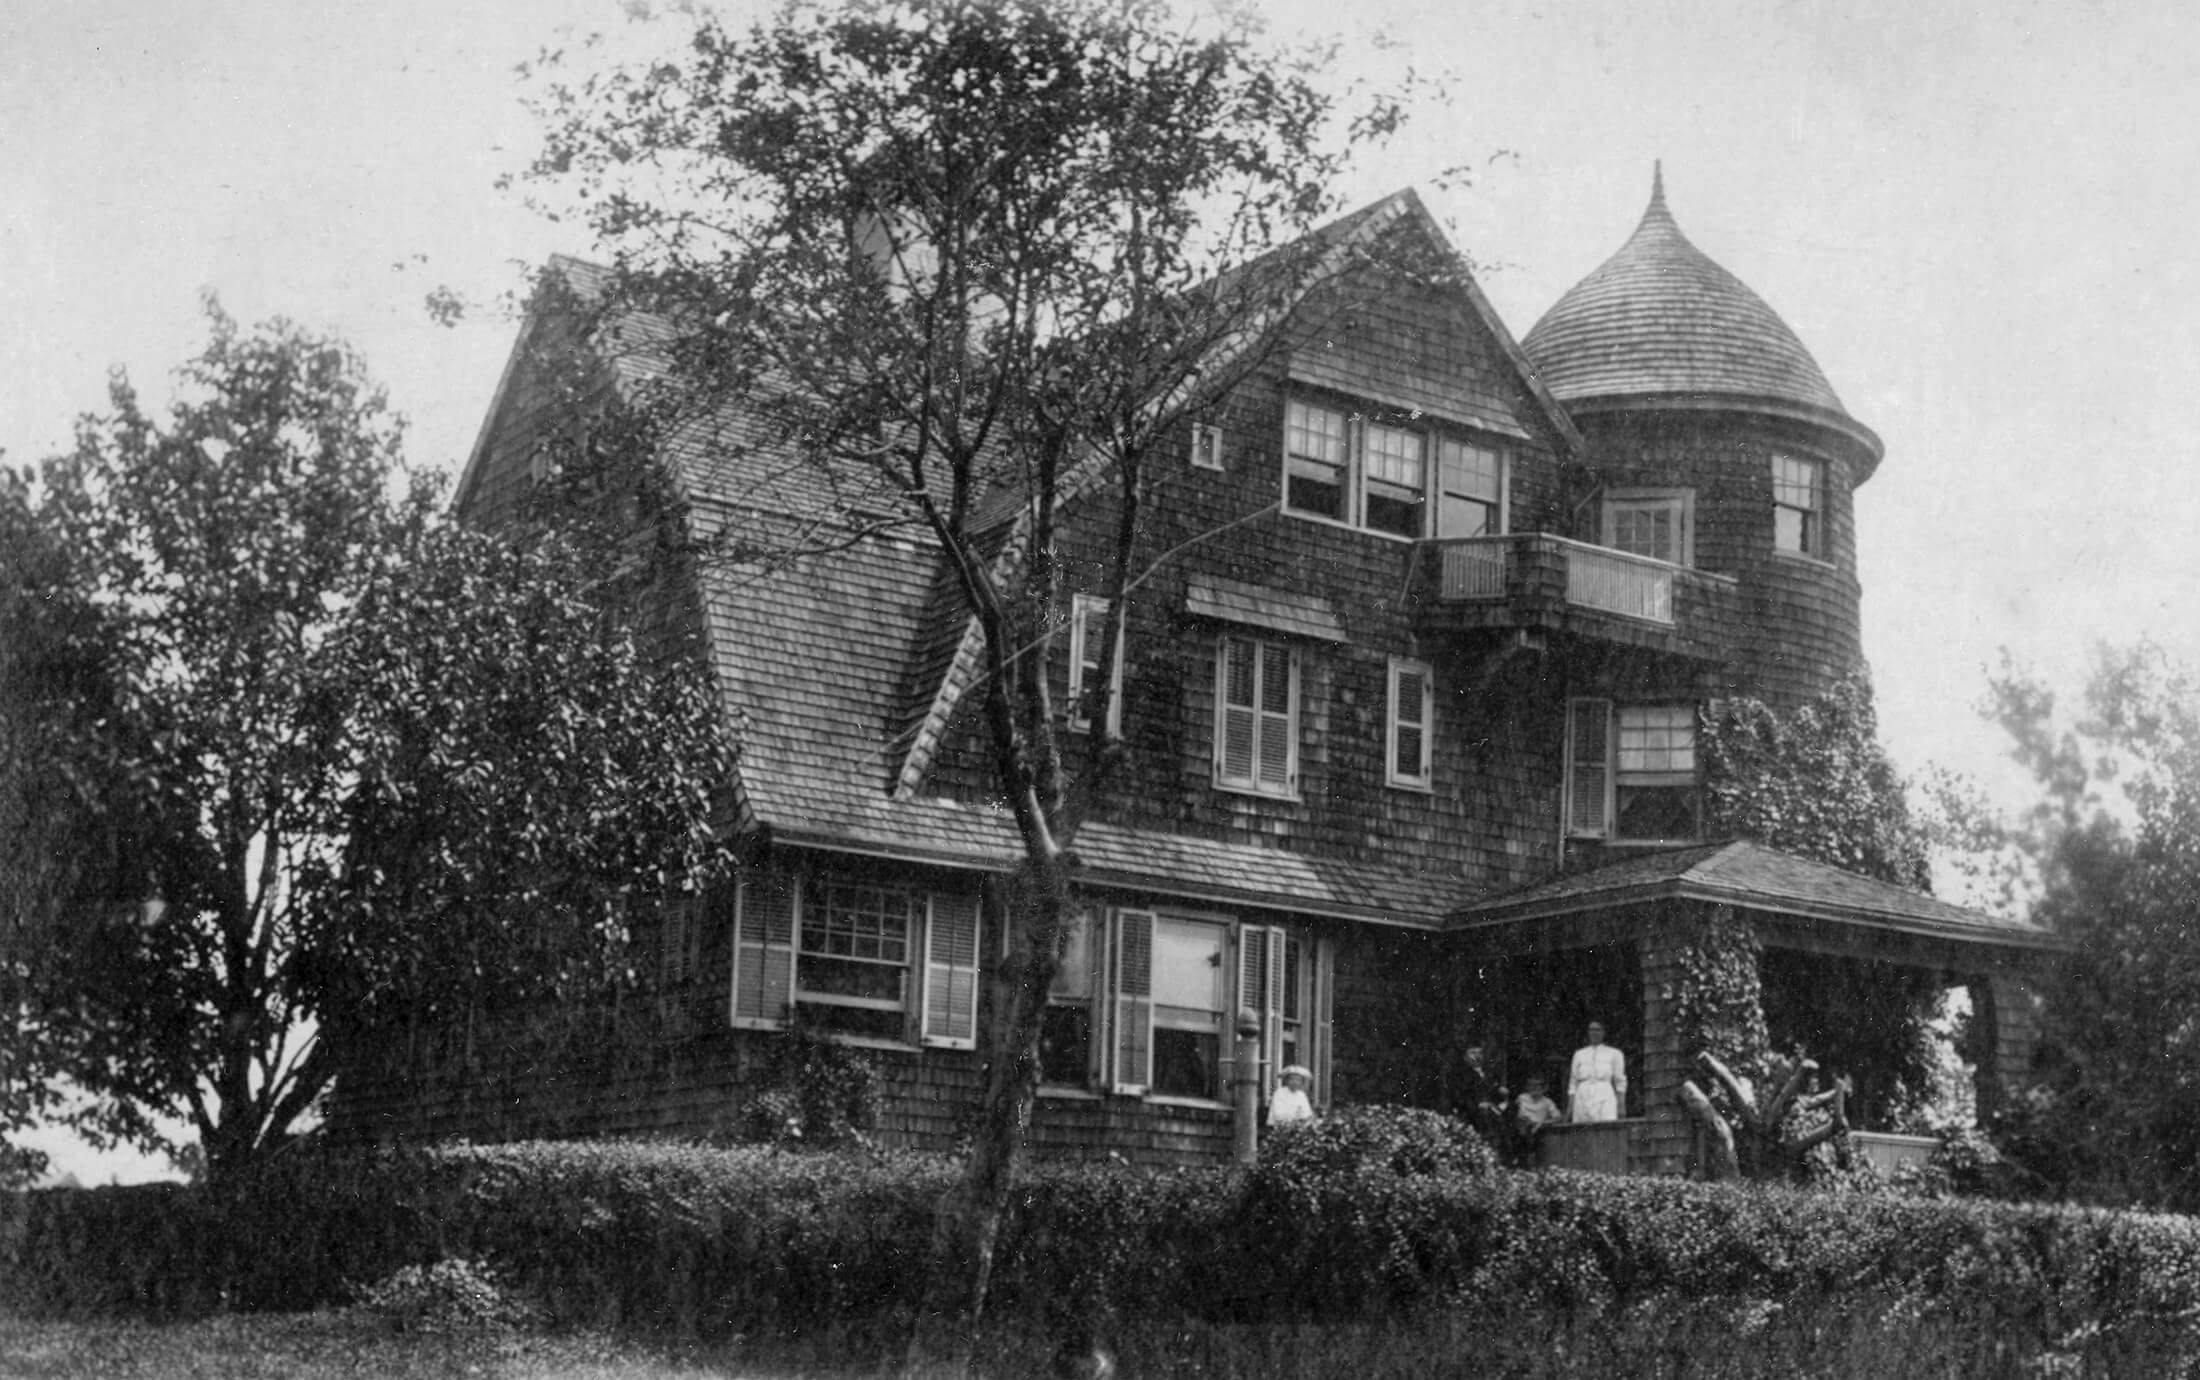 the Albert E. Parfitt family home in Dyker Heights, circa 1908 